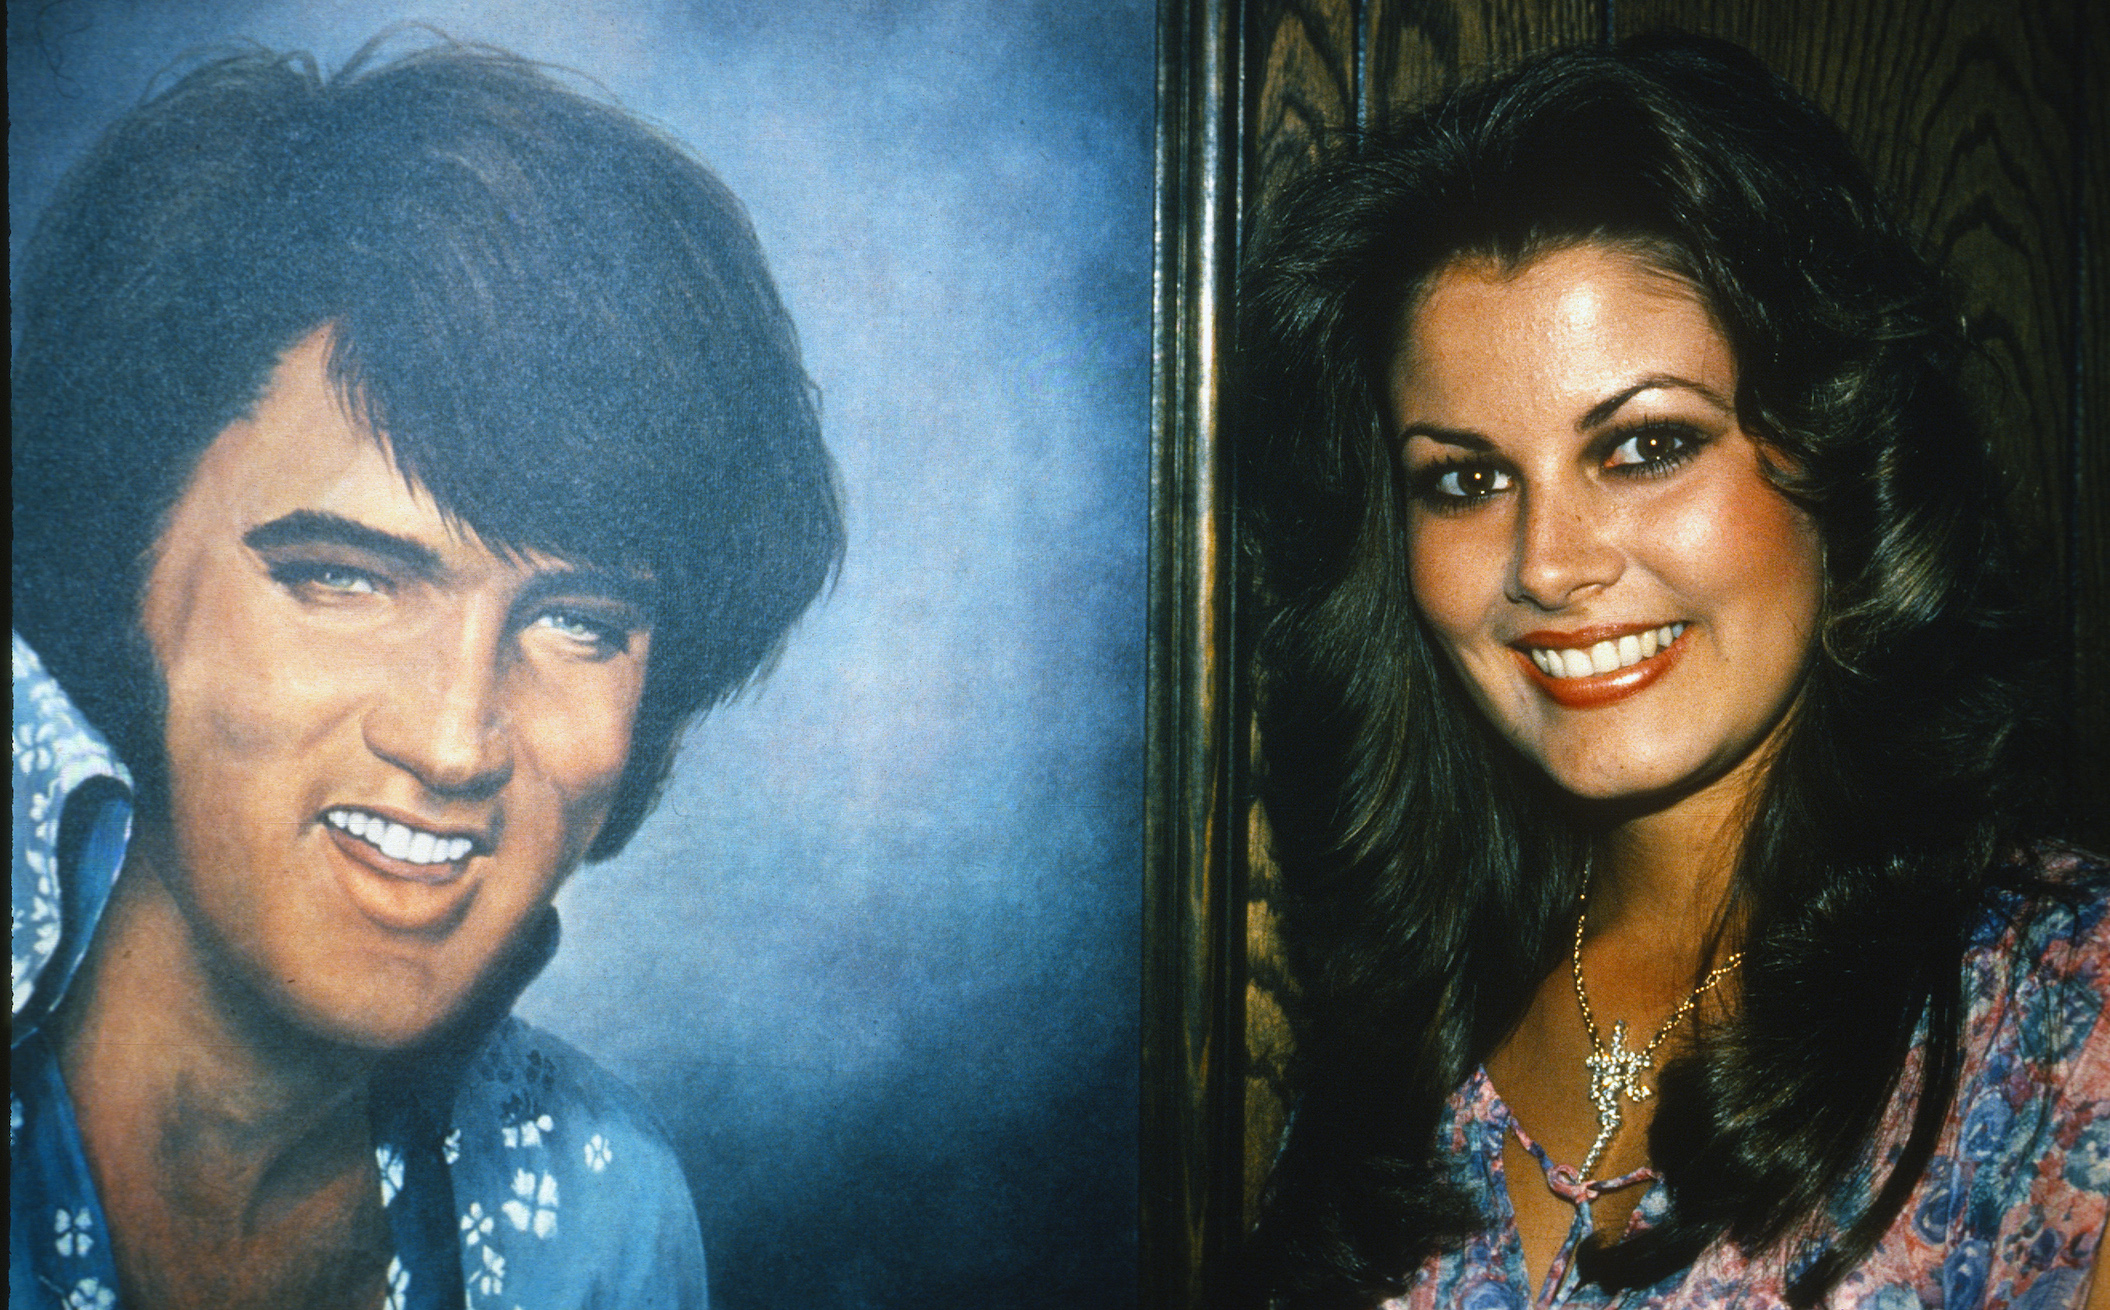 Ginger Alden, fiancee of Elvis Presley and the last person to see him alive, stands beside a portrait of Elvis Presley on April 1, 1978